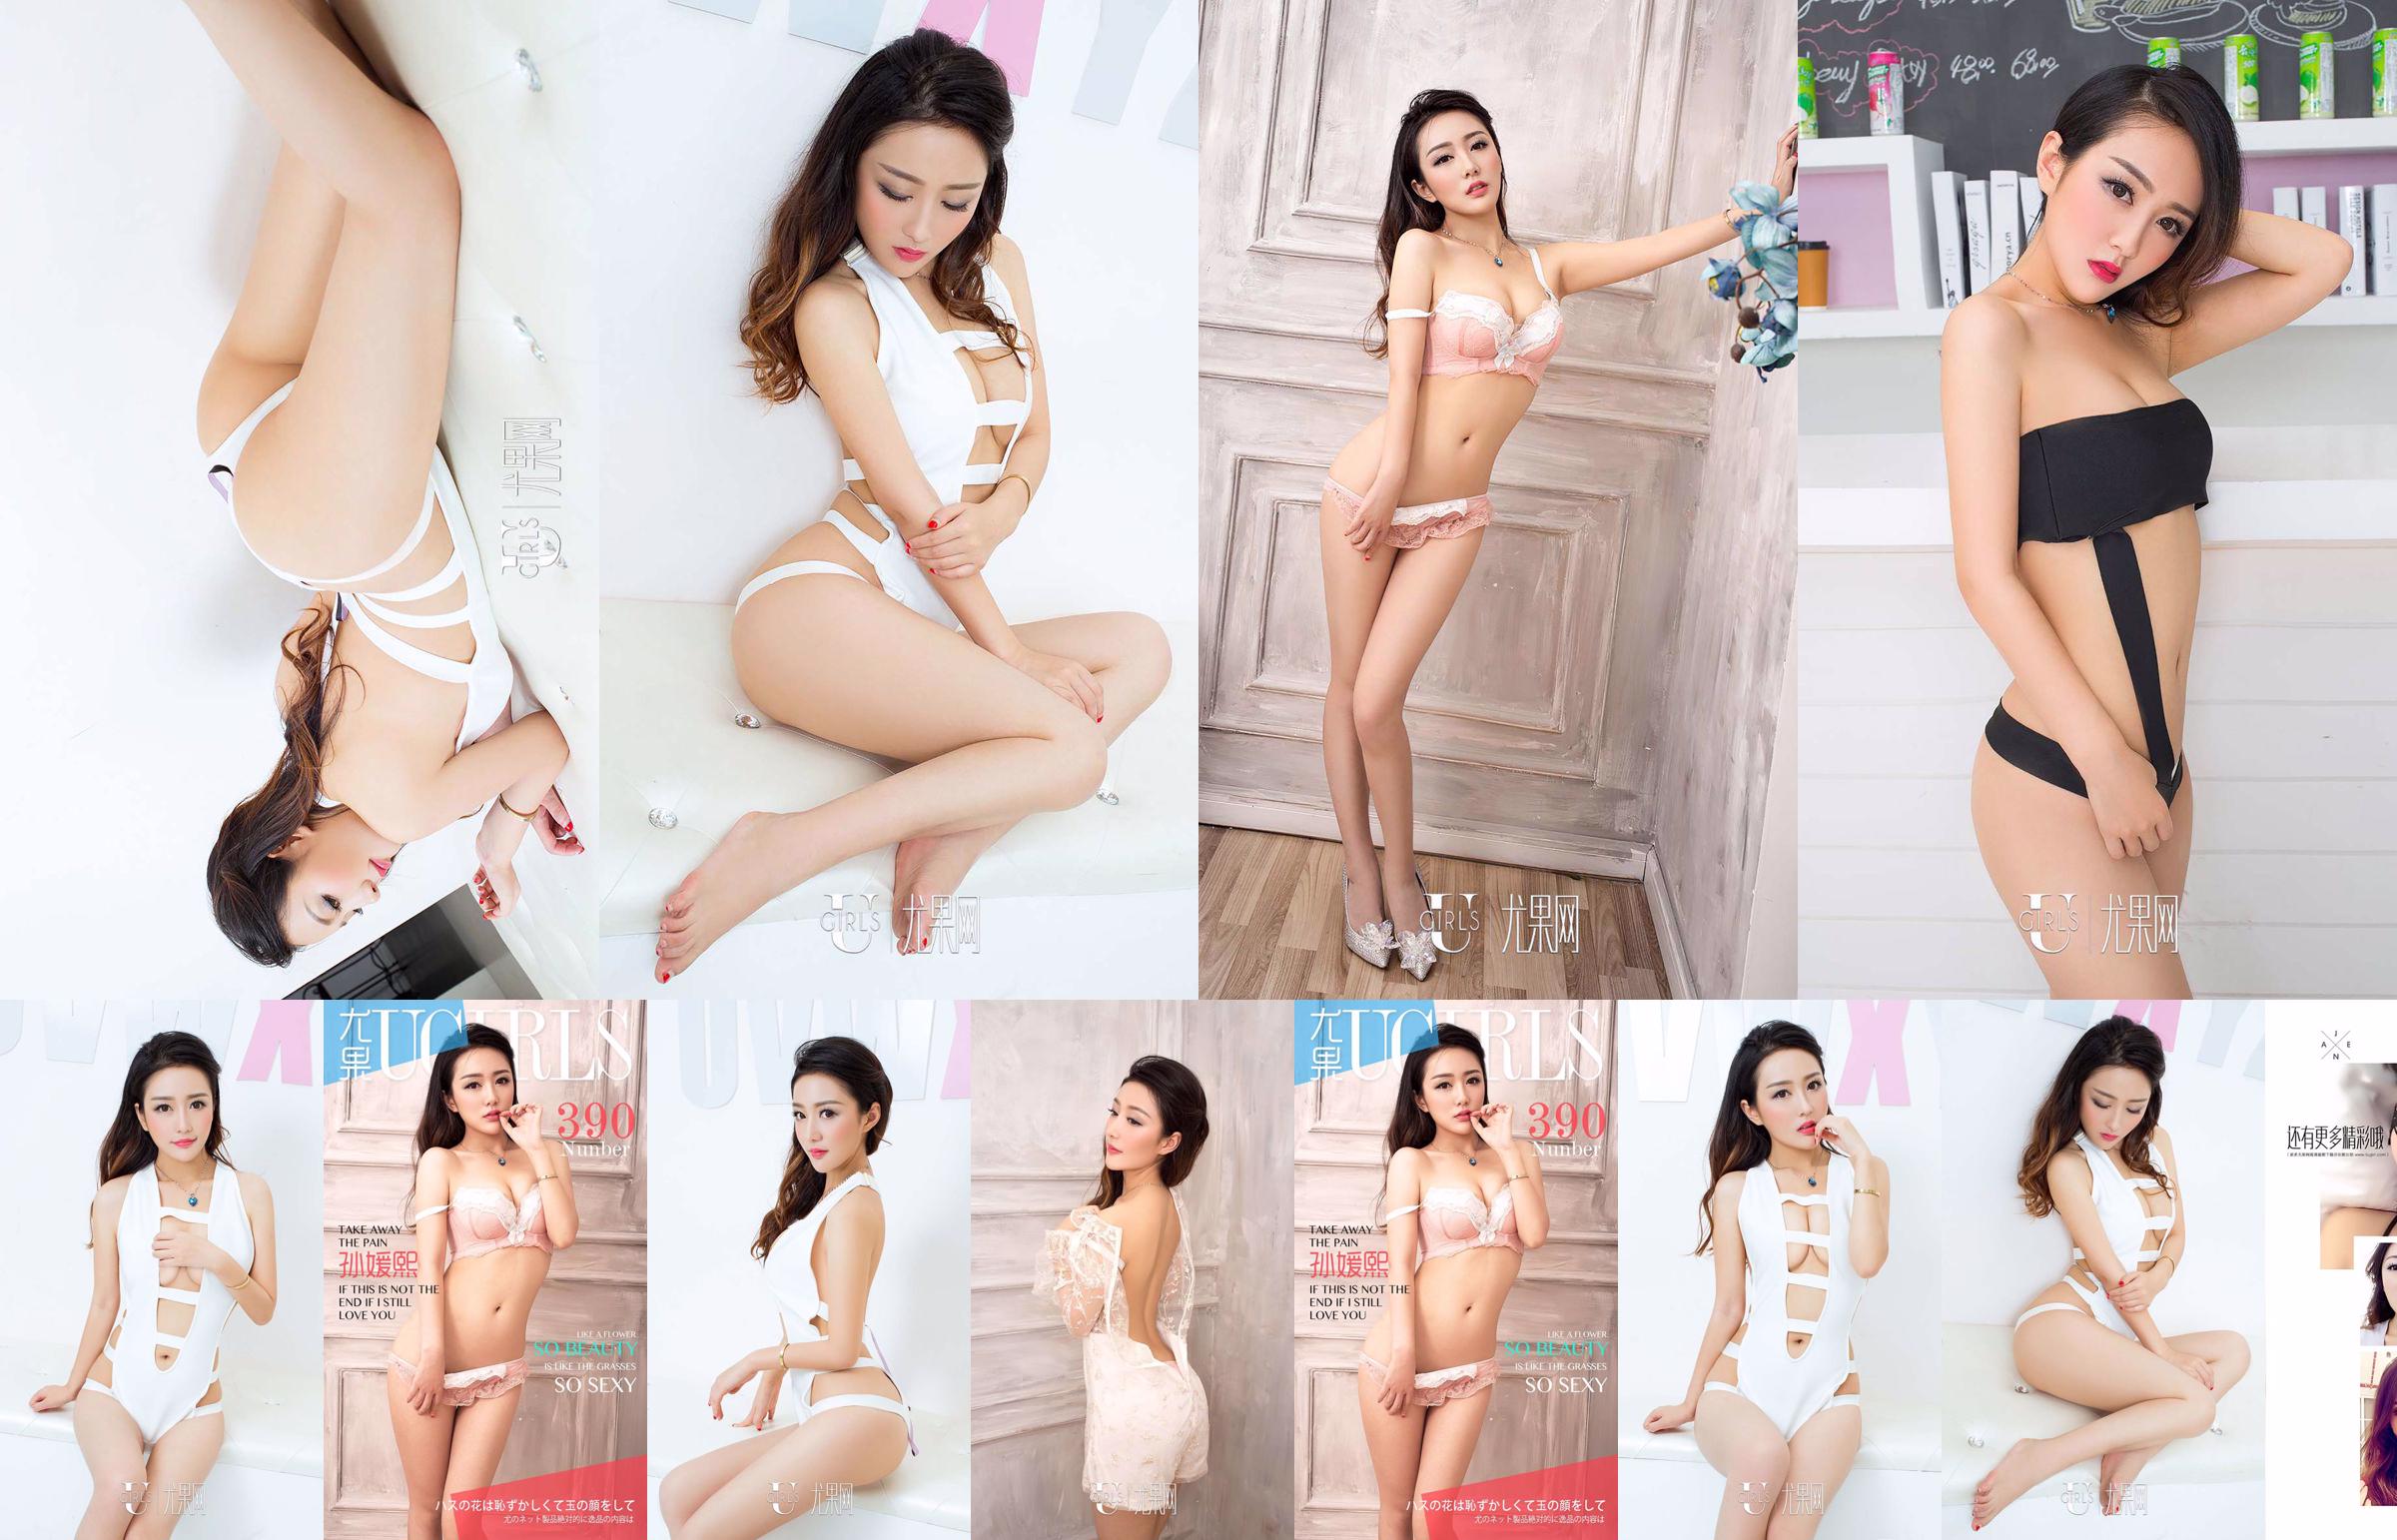 Sun Yuanxi "tão bela tão sexy" [爱 优 物 Ugirls] No.390 No.c32299 Página 4